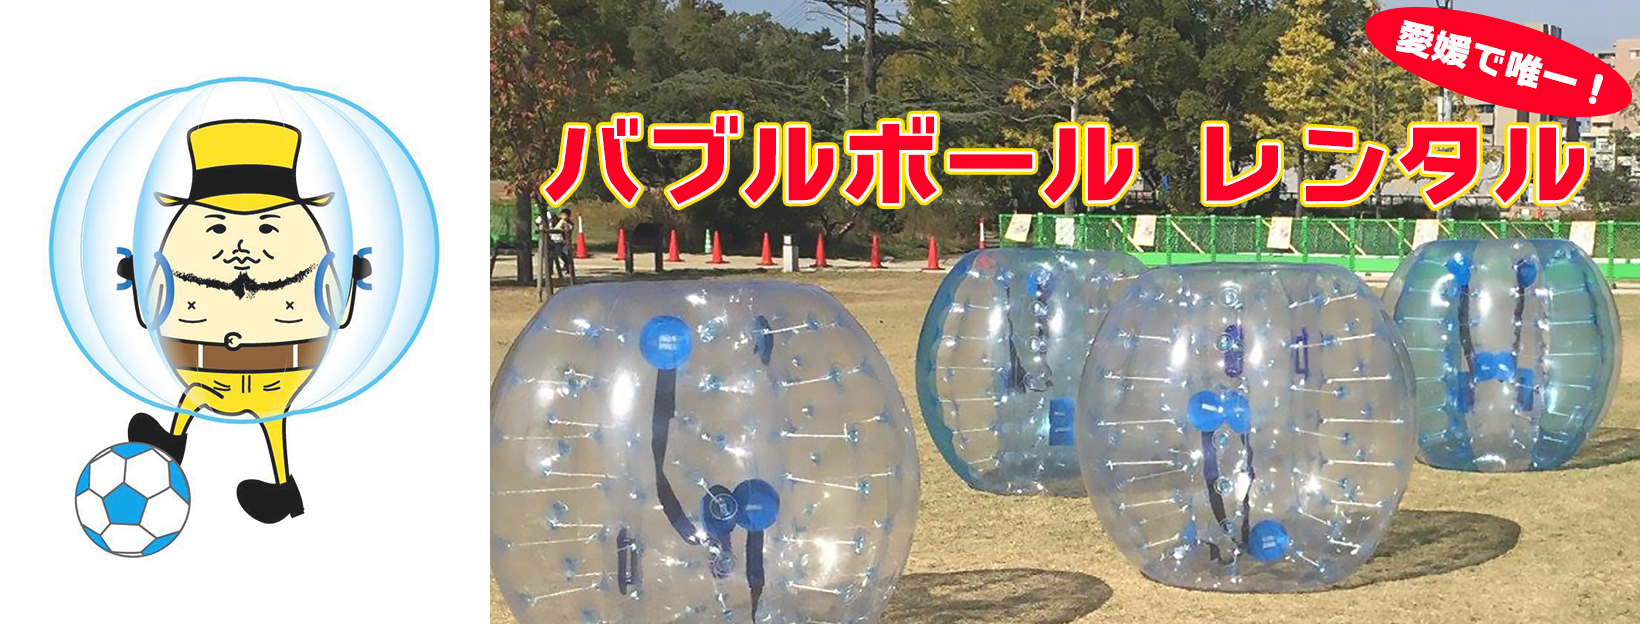 bubbleball-linkbanner